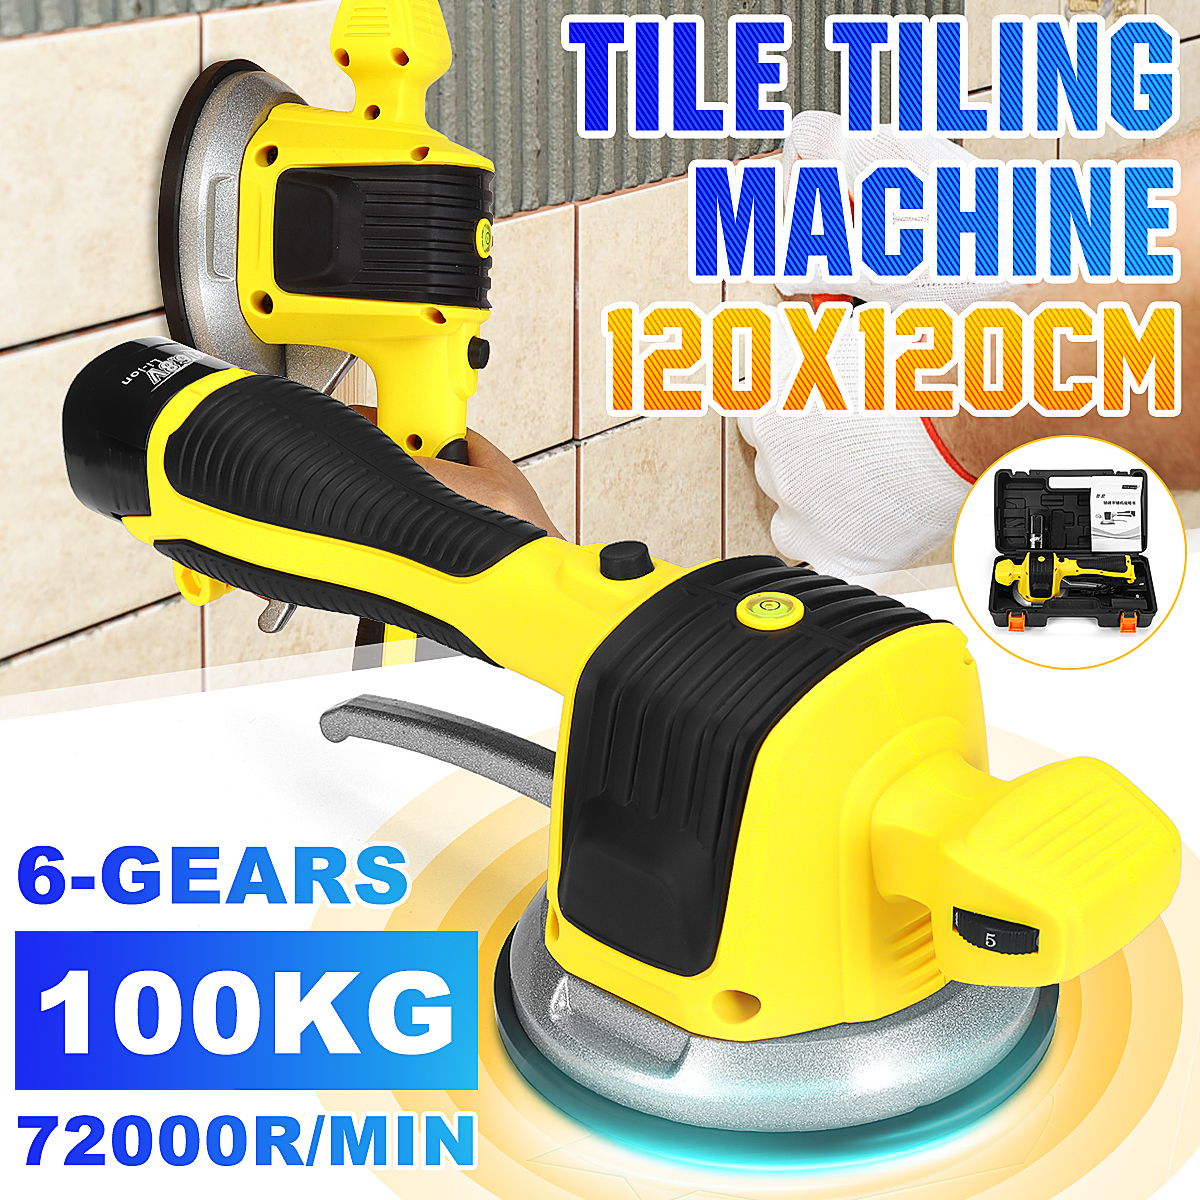 6-Speed-Tile-Tiling-Machine-Vibrator-Suction-LED-Light-120x120cm-Ceramic-Floor-1766055-1